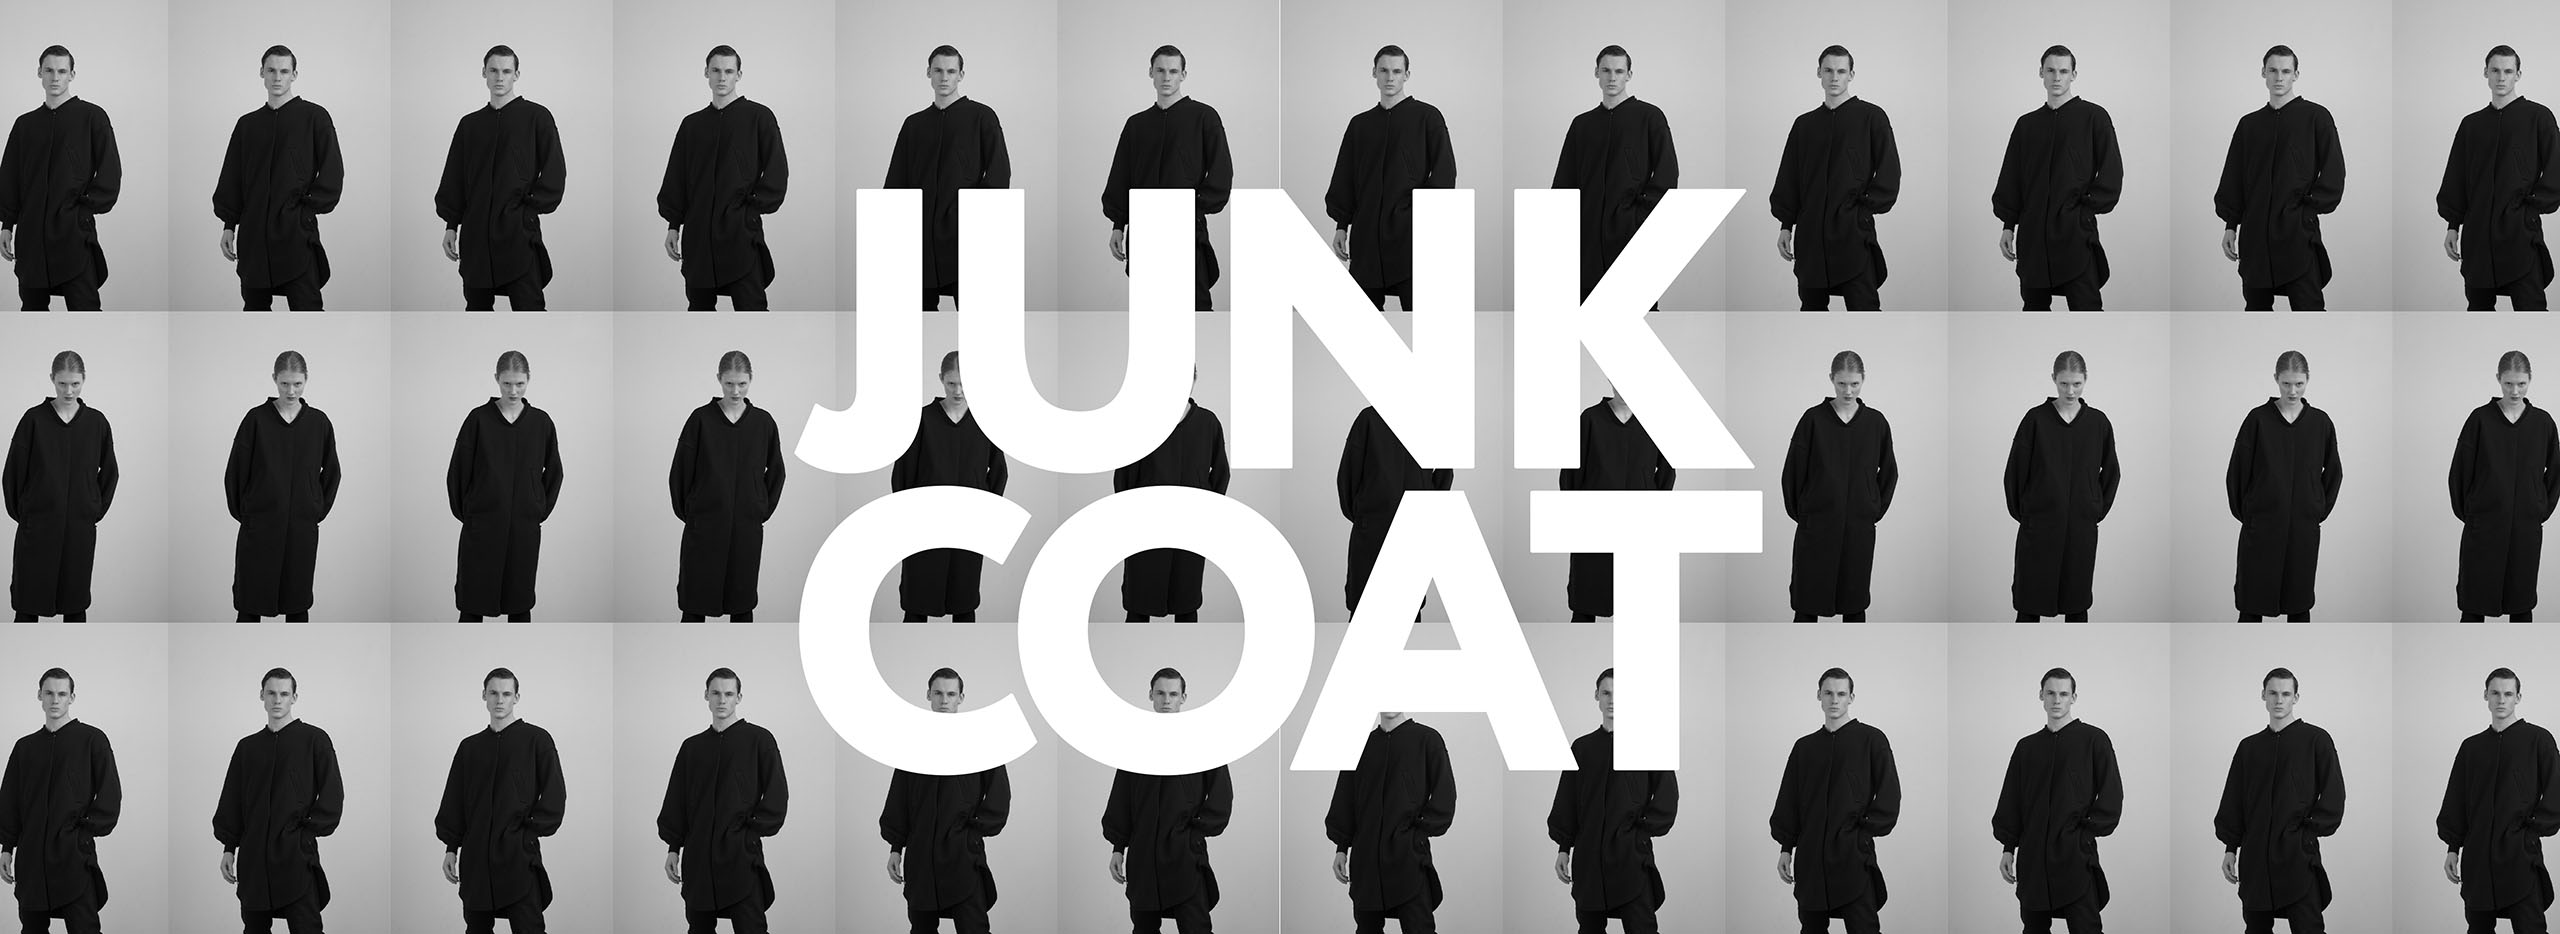 junk-coat-banner